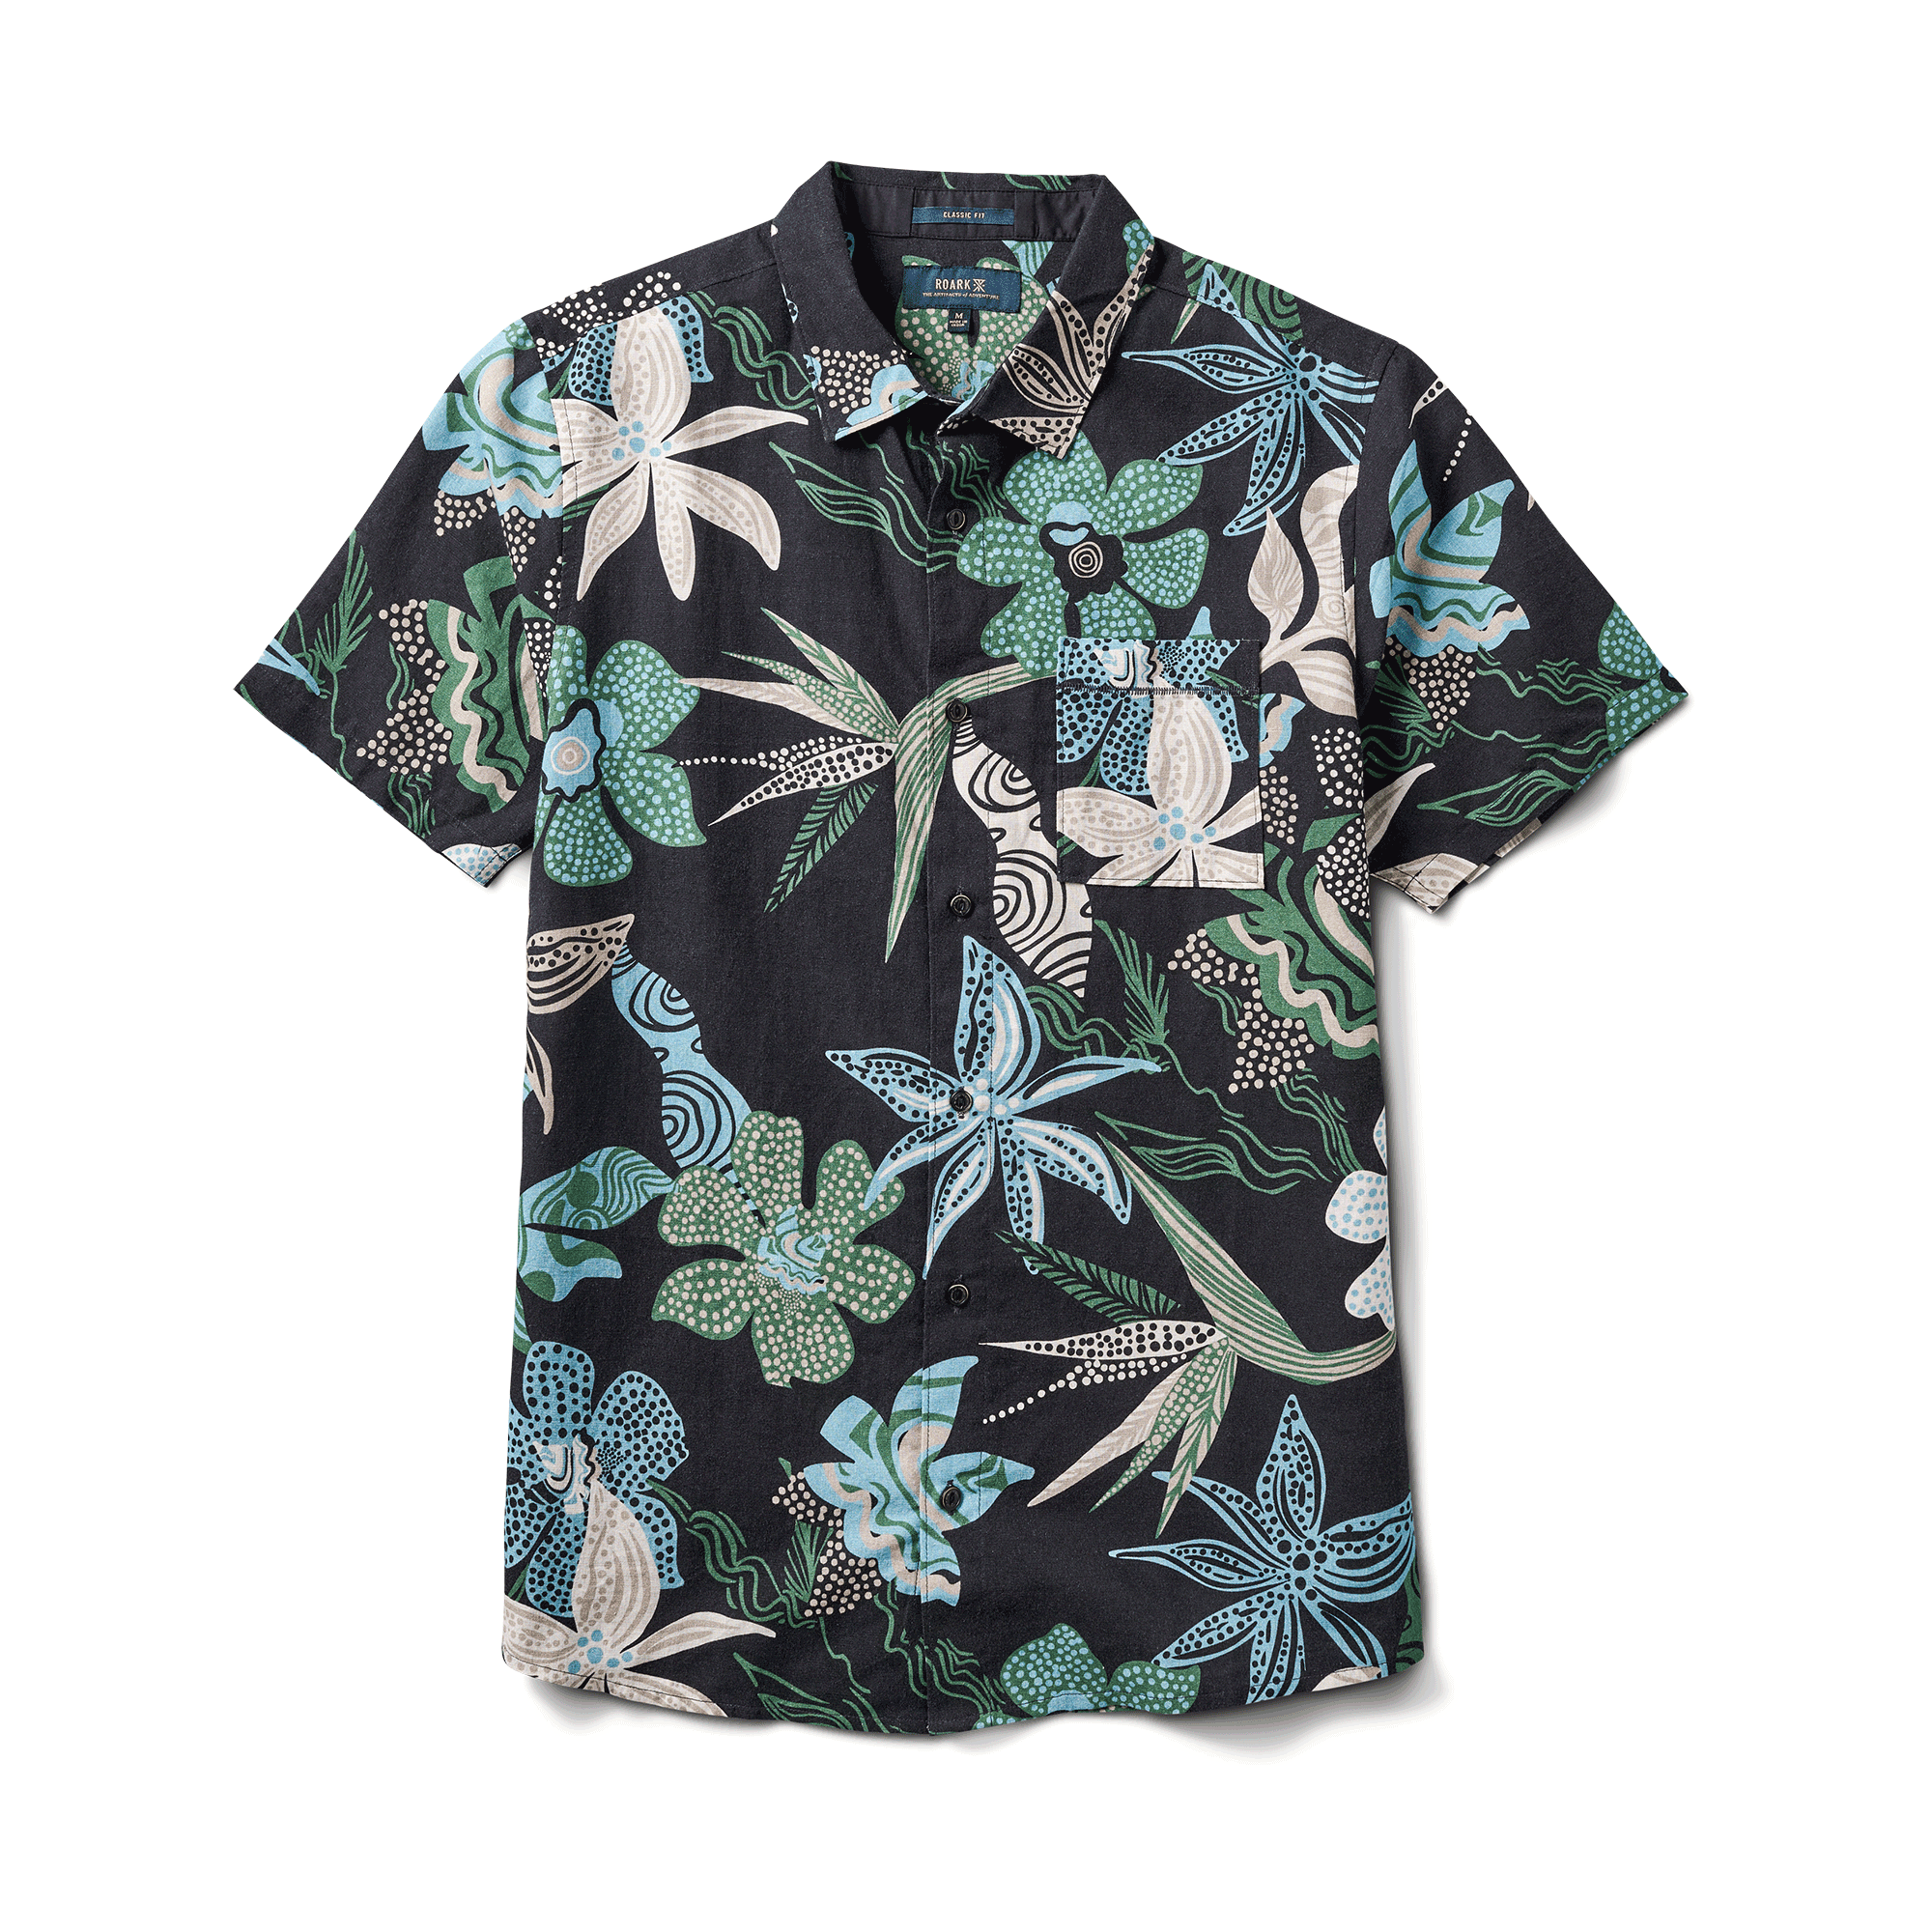 Camisa manga corta color azul oscuro con un diseño floran en distintos tonos de verde.